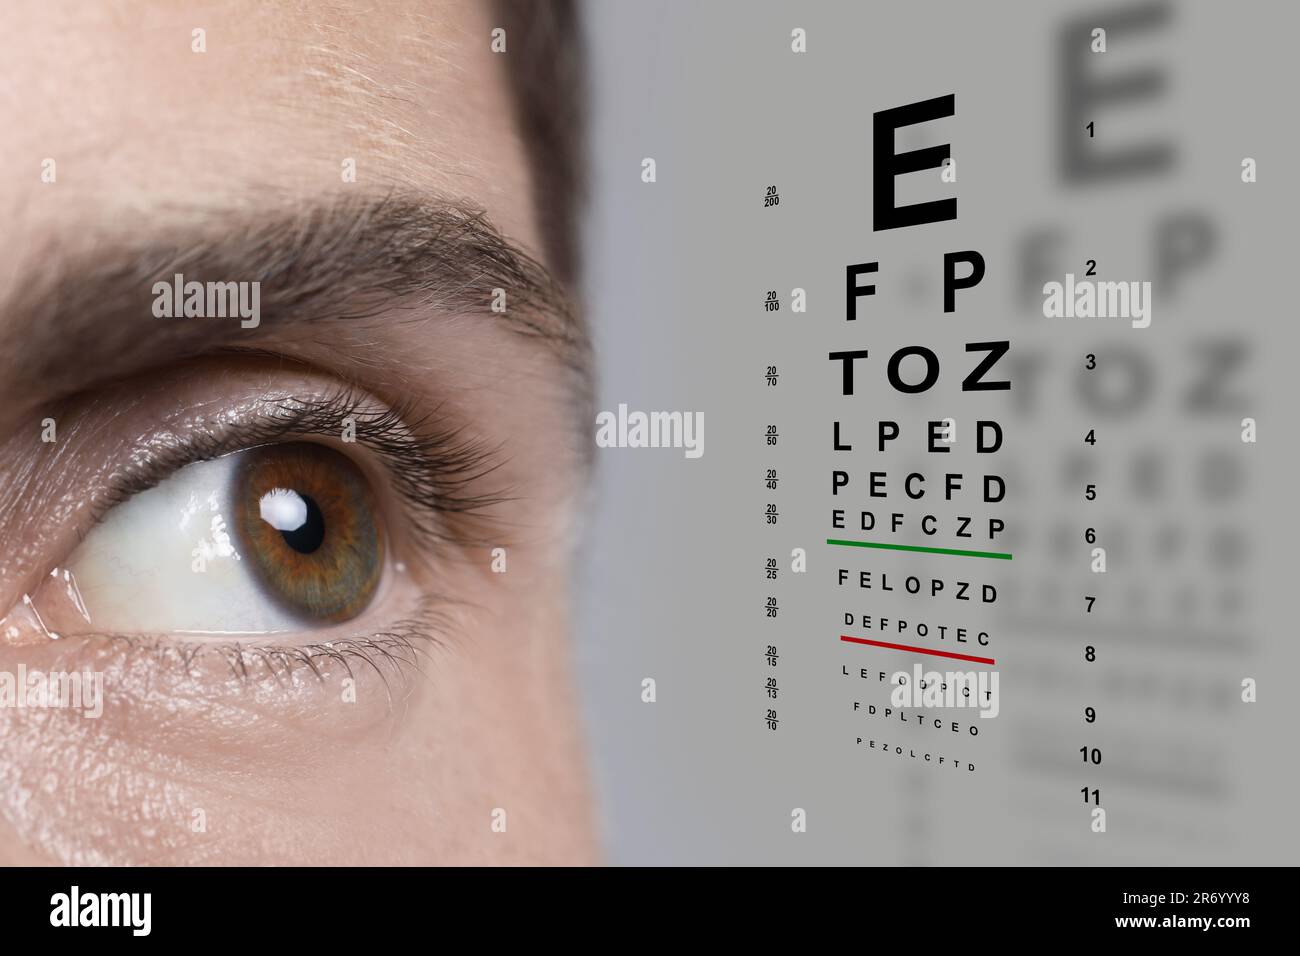 https://c8.alamy.com/comp/2R6YYY8/vision-test-man-and-eye-chart-on-light-grey-background-2R6YYY8.jpg